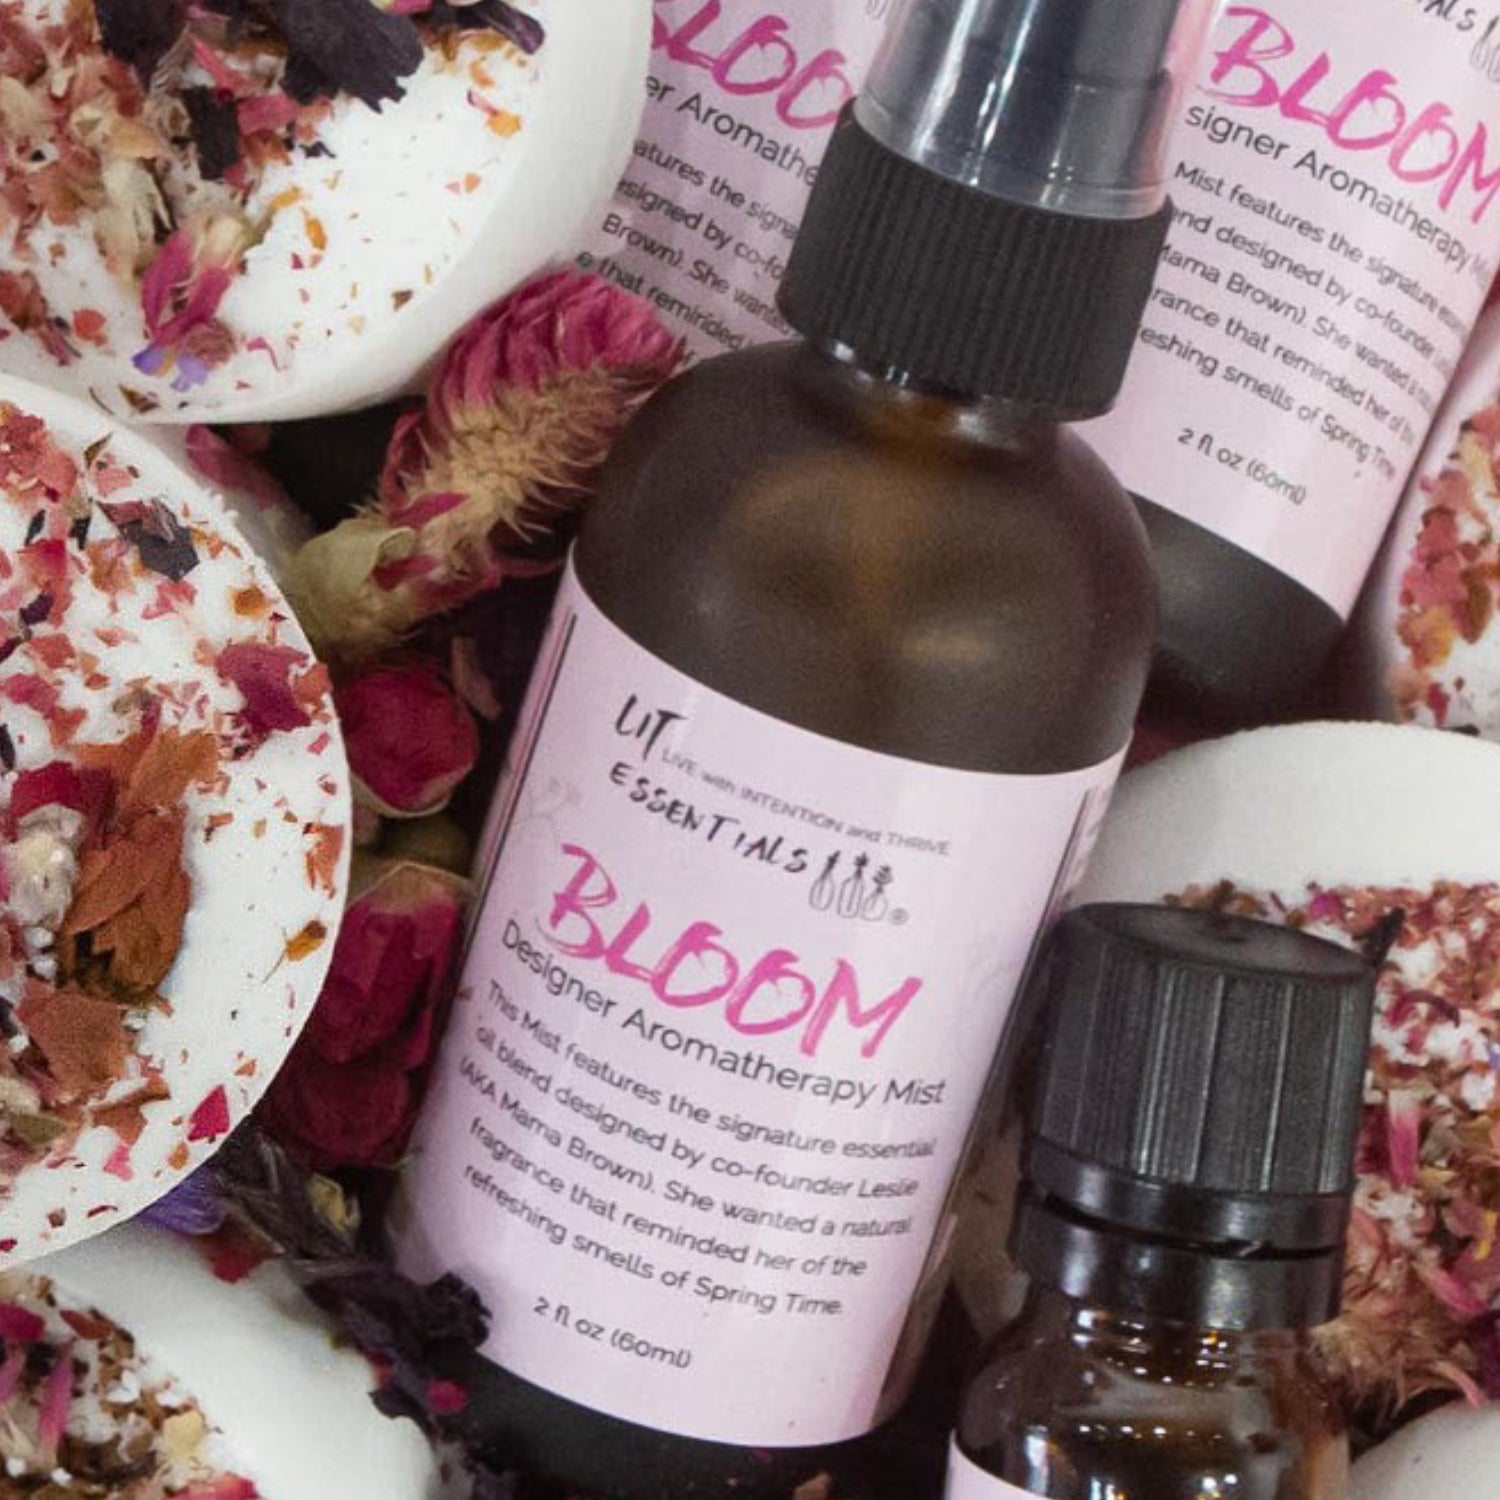 Bloom Designer Aromatherapy Mist